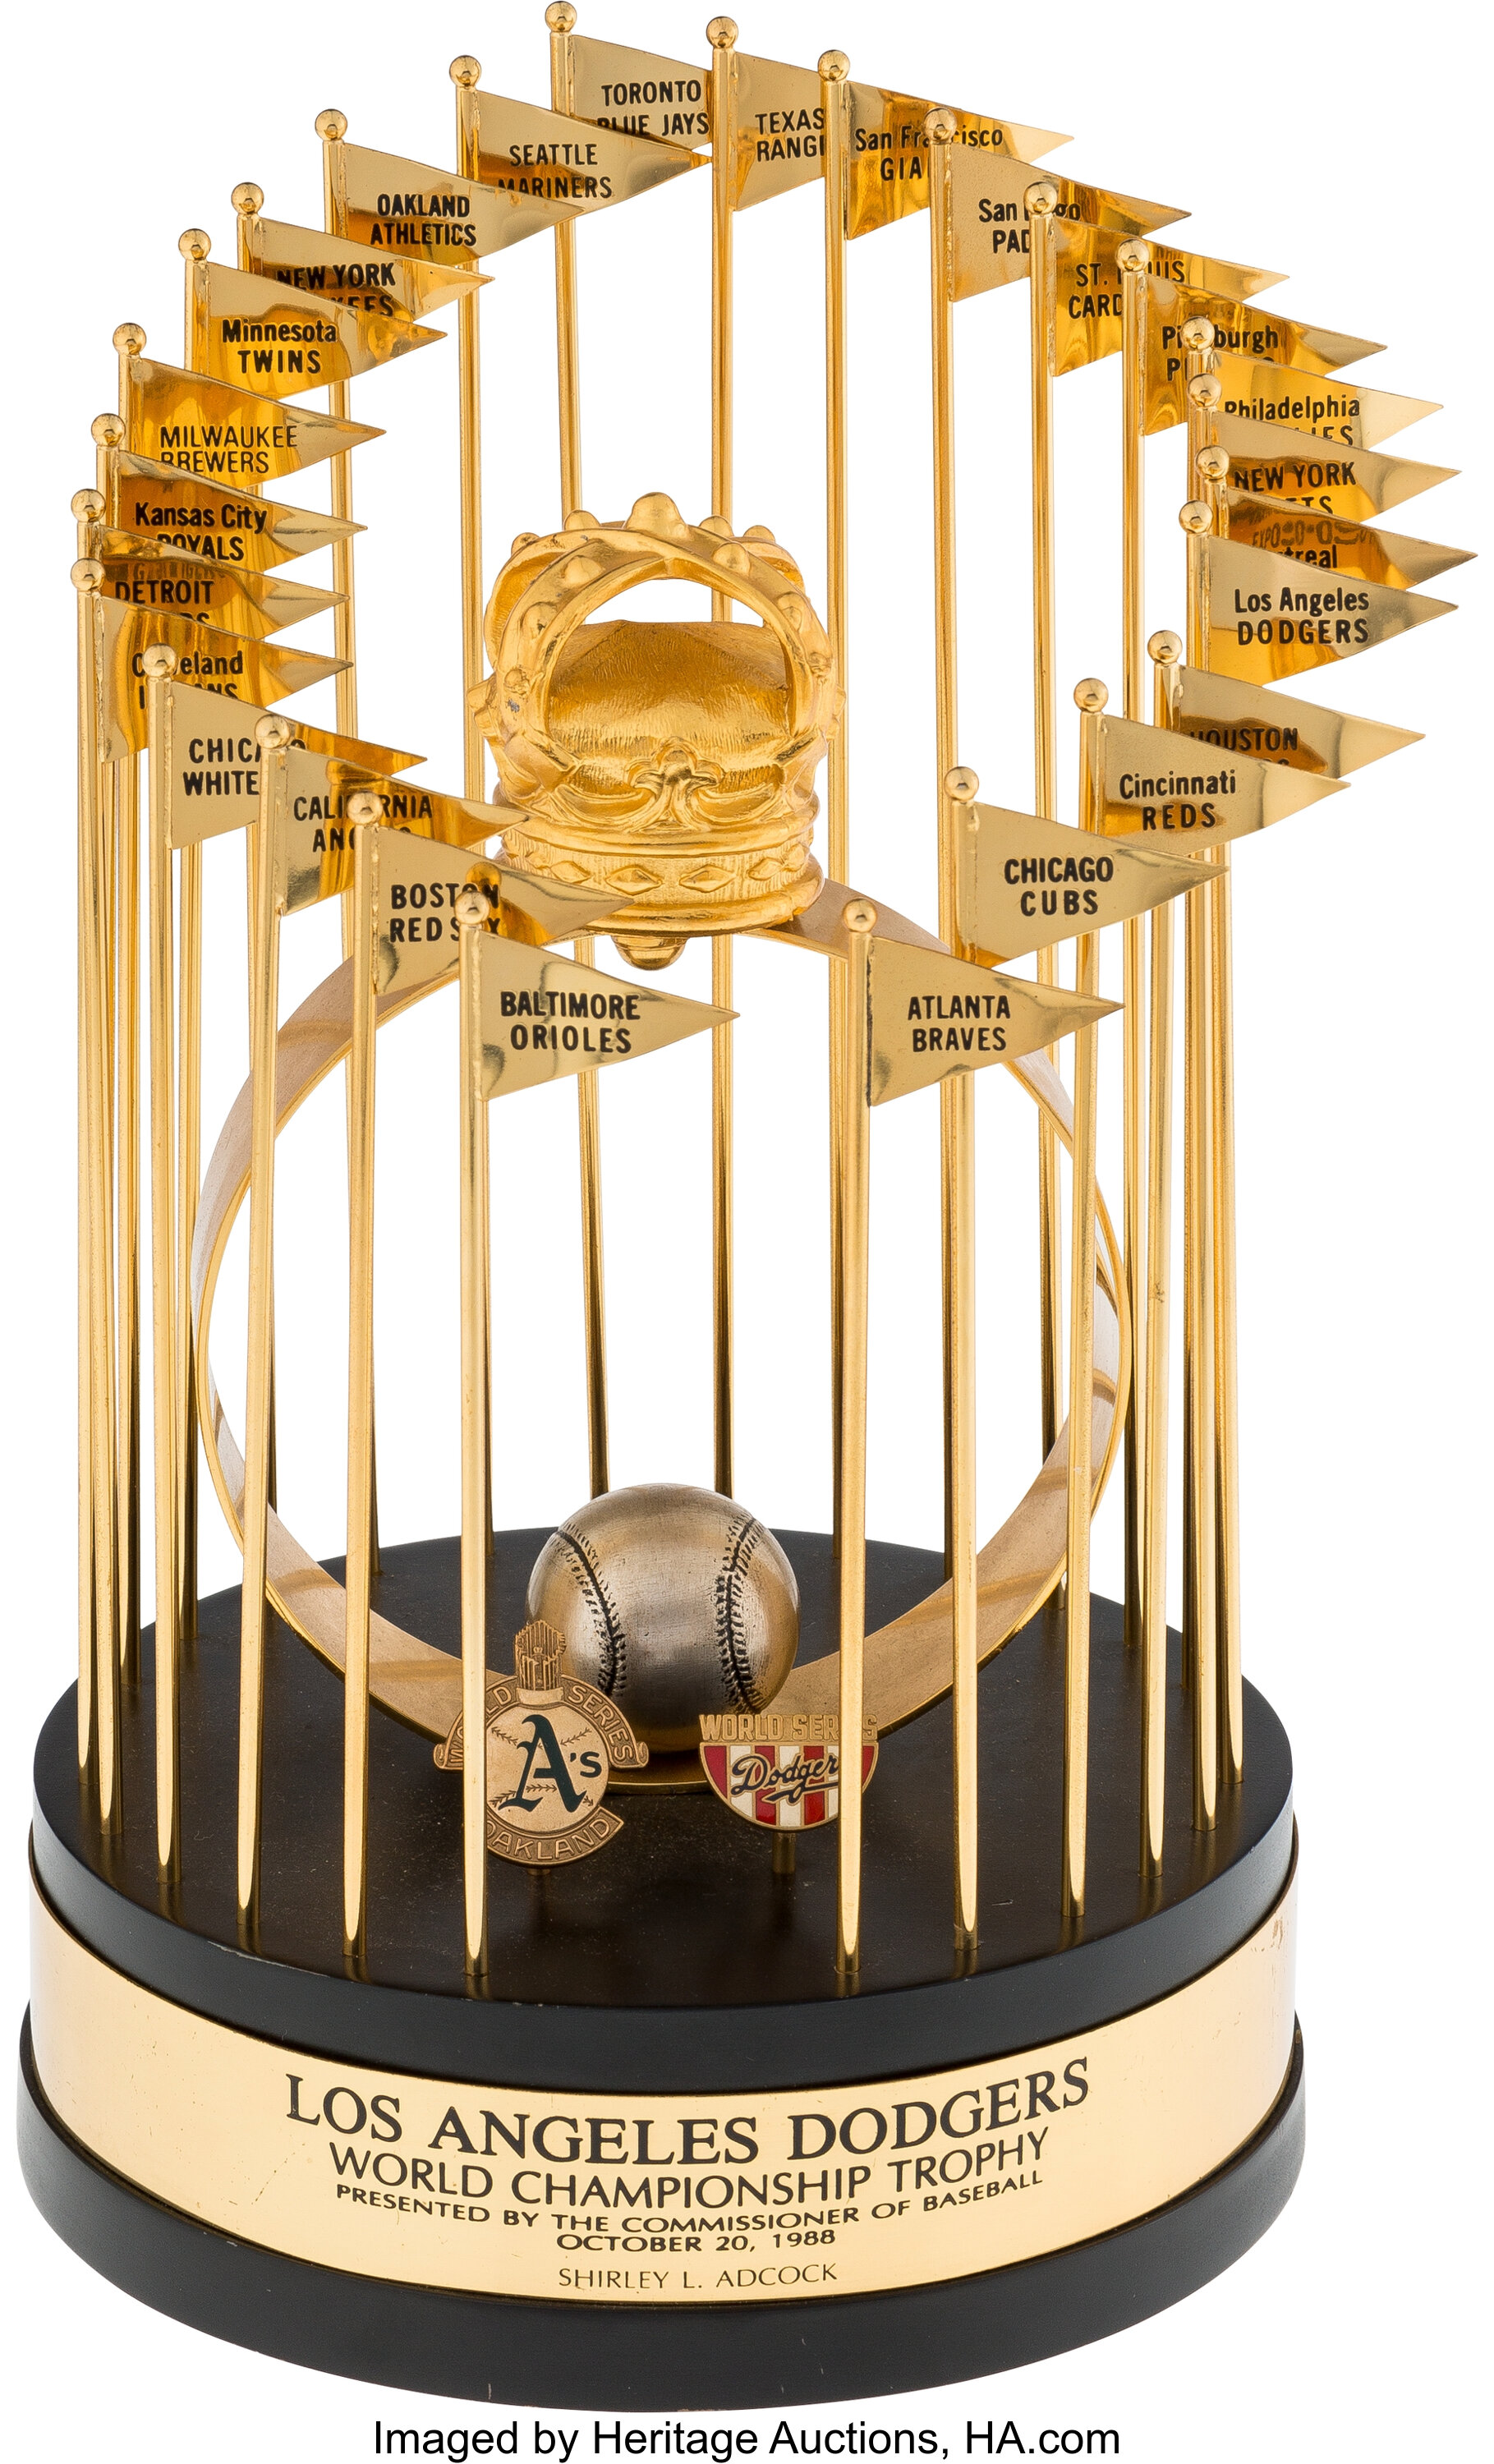 Los Angeles Dodgers on X: Trophy szn. #WorldSeries